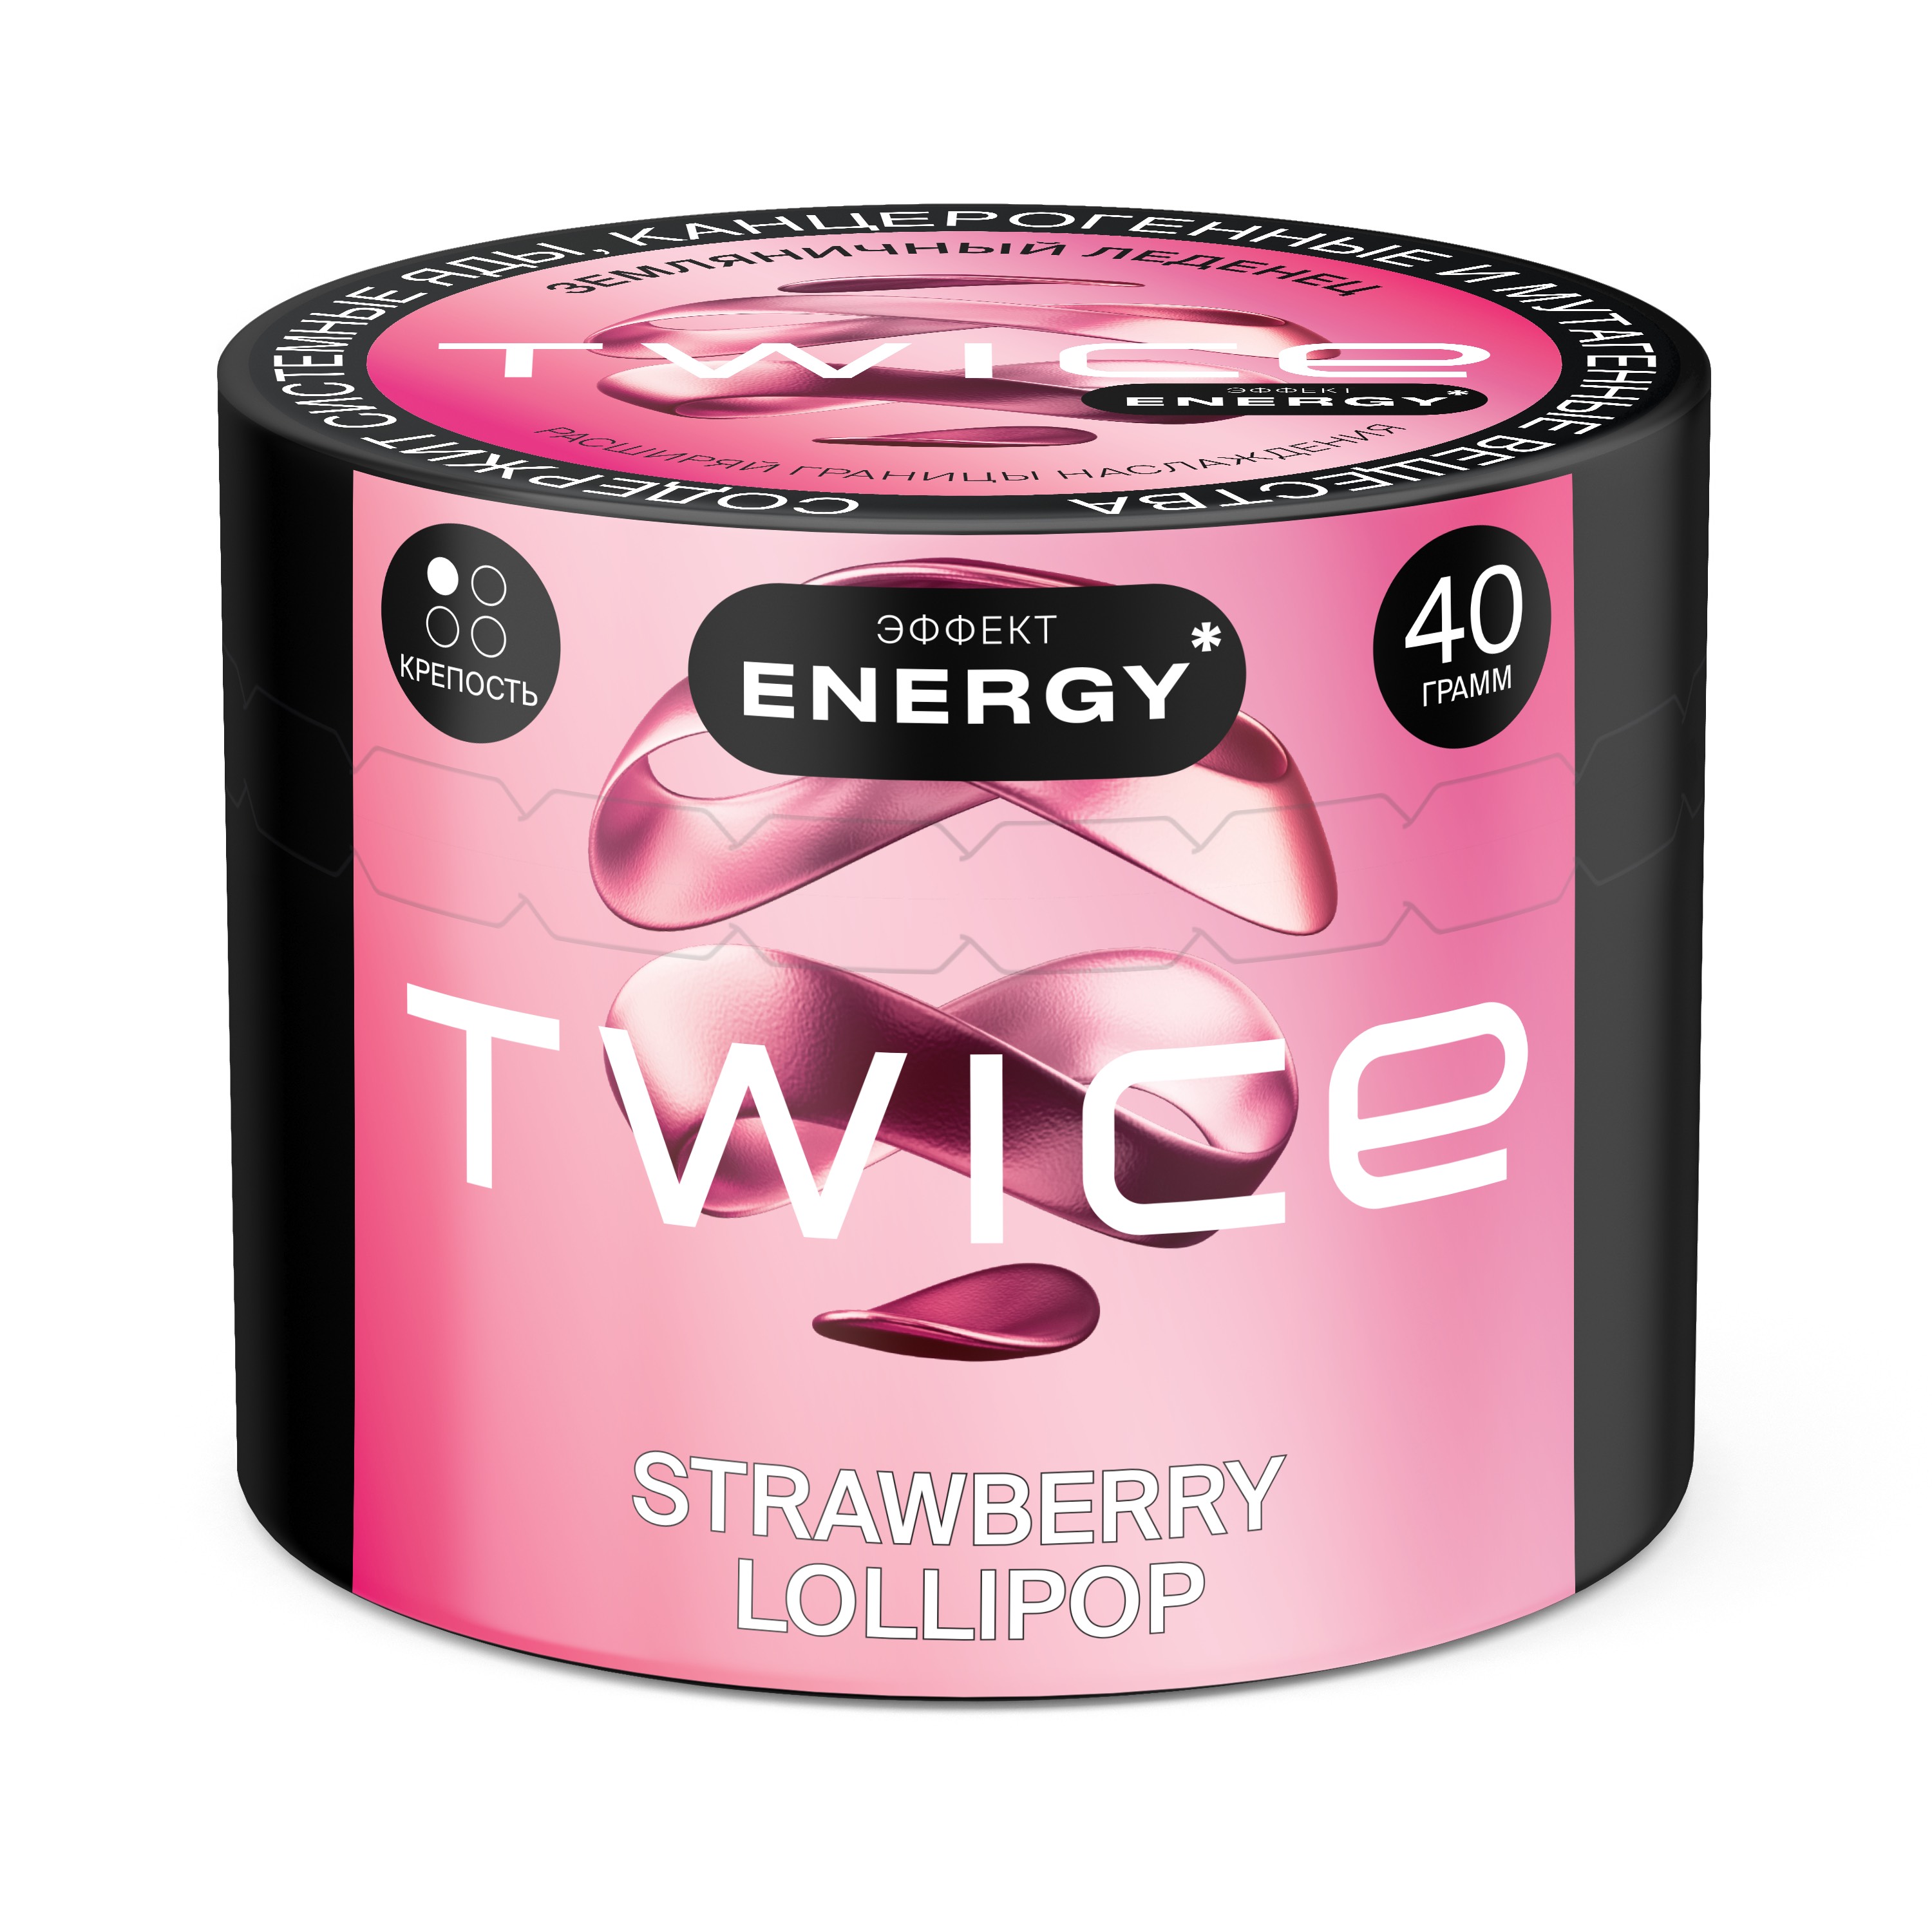 Табак - Twice - Земляничный леденец - Energy - 40 g